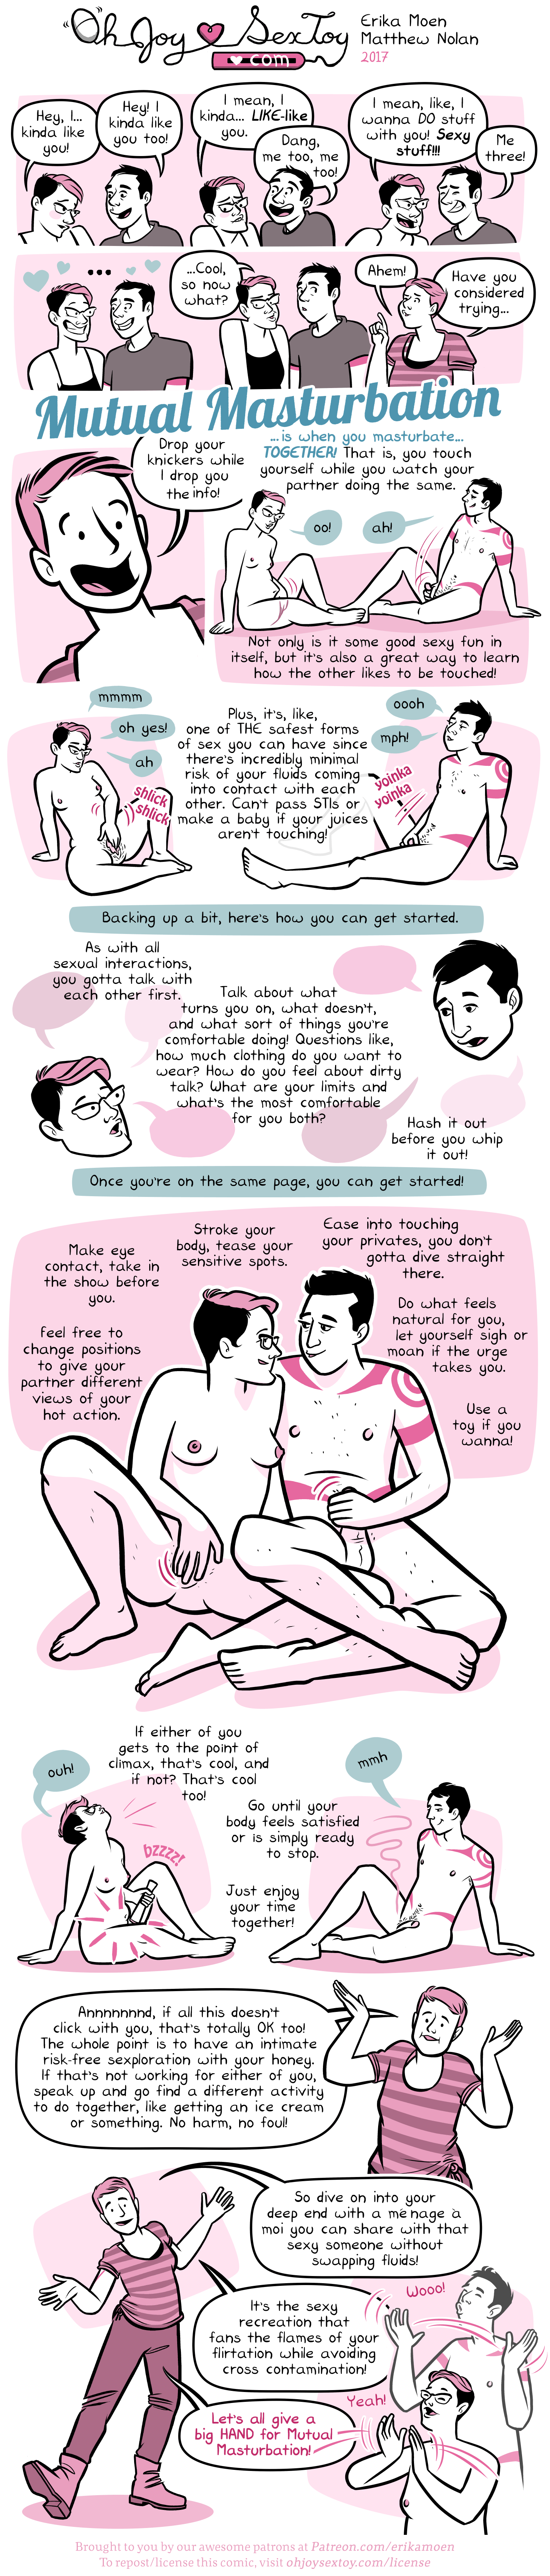 Mutual masturbation porn comics